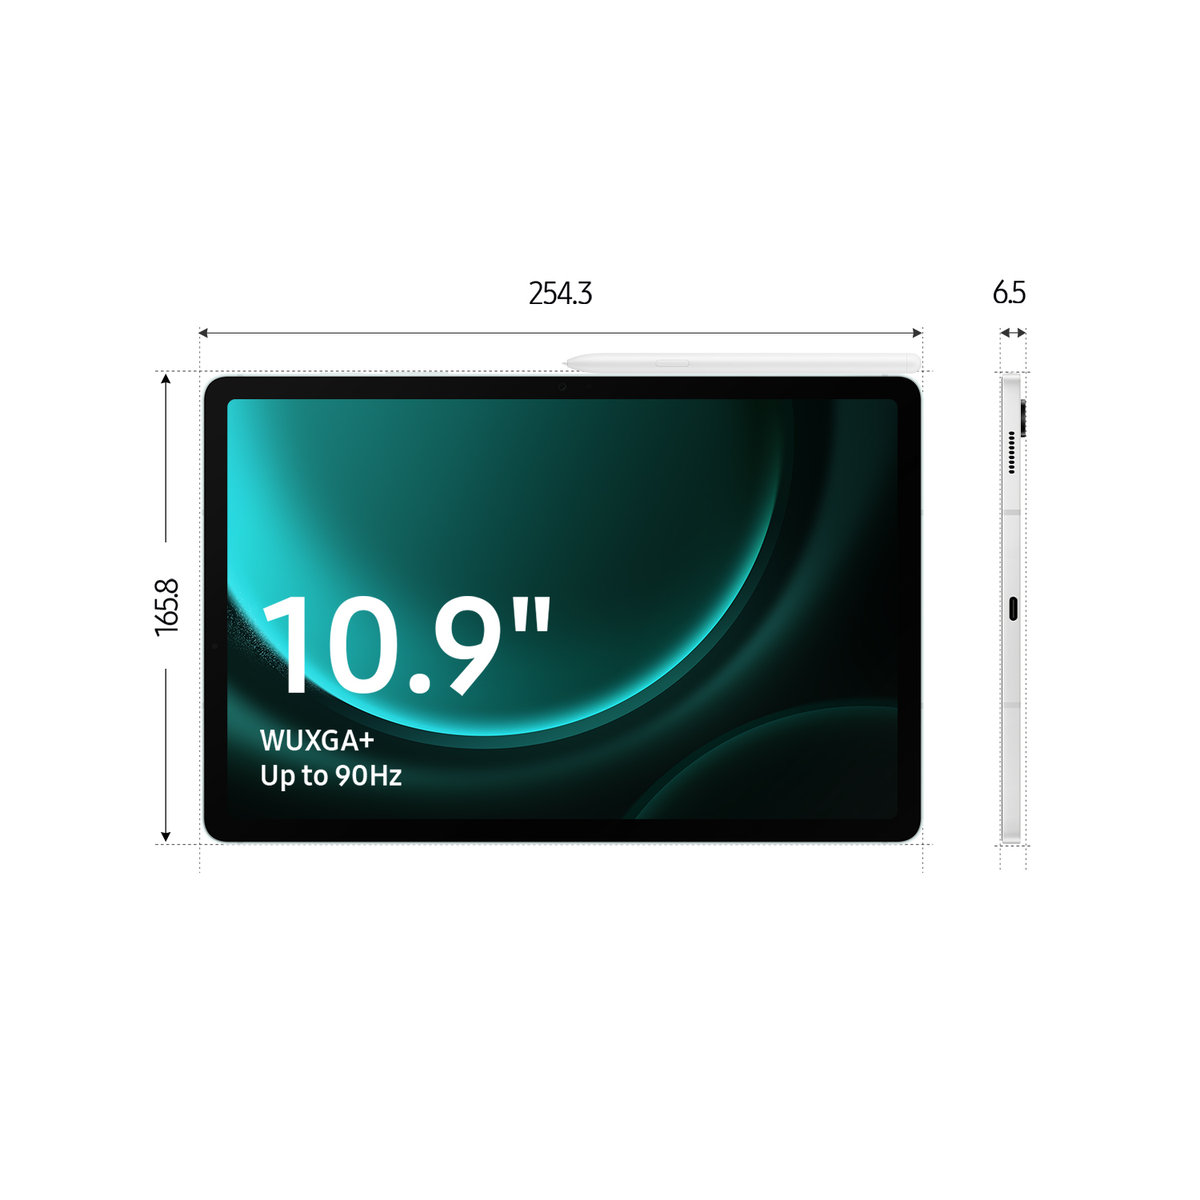 10,9 FE, Grau Galaxy Tab Zoll, SAMSUNG GB, S9 256 Tablet,